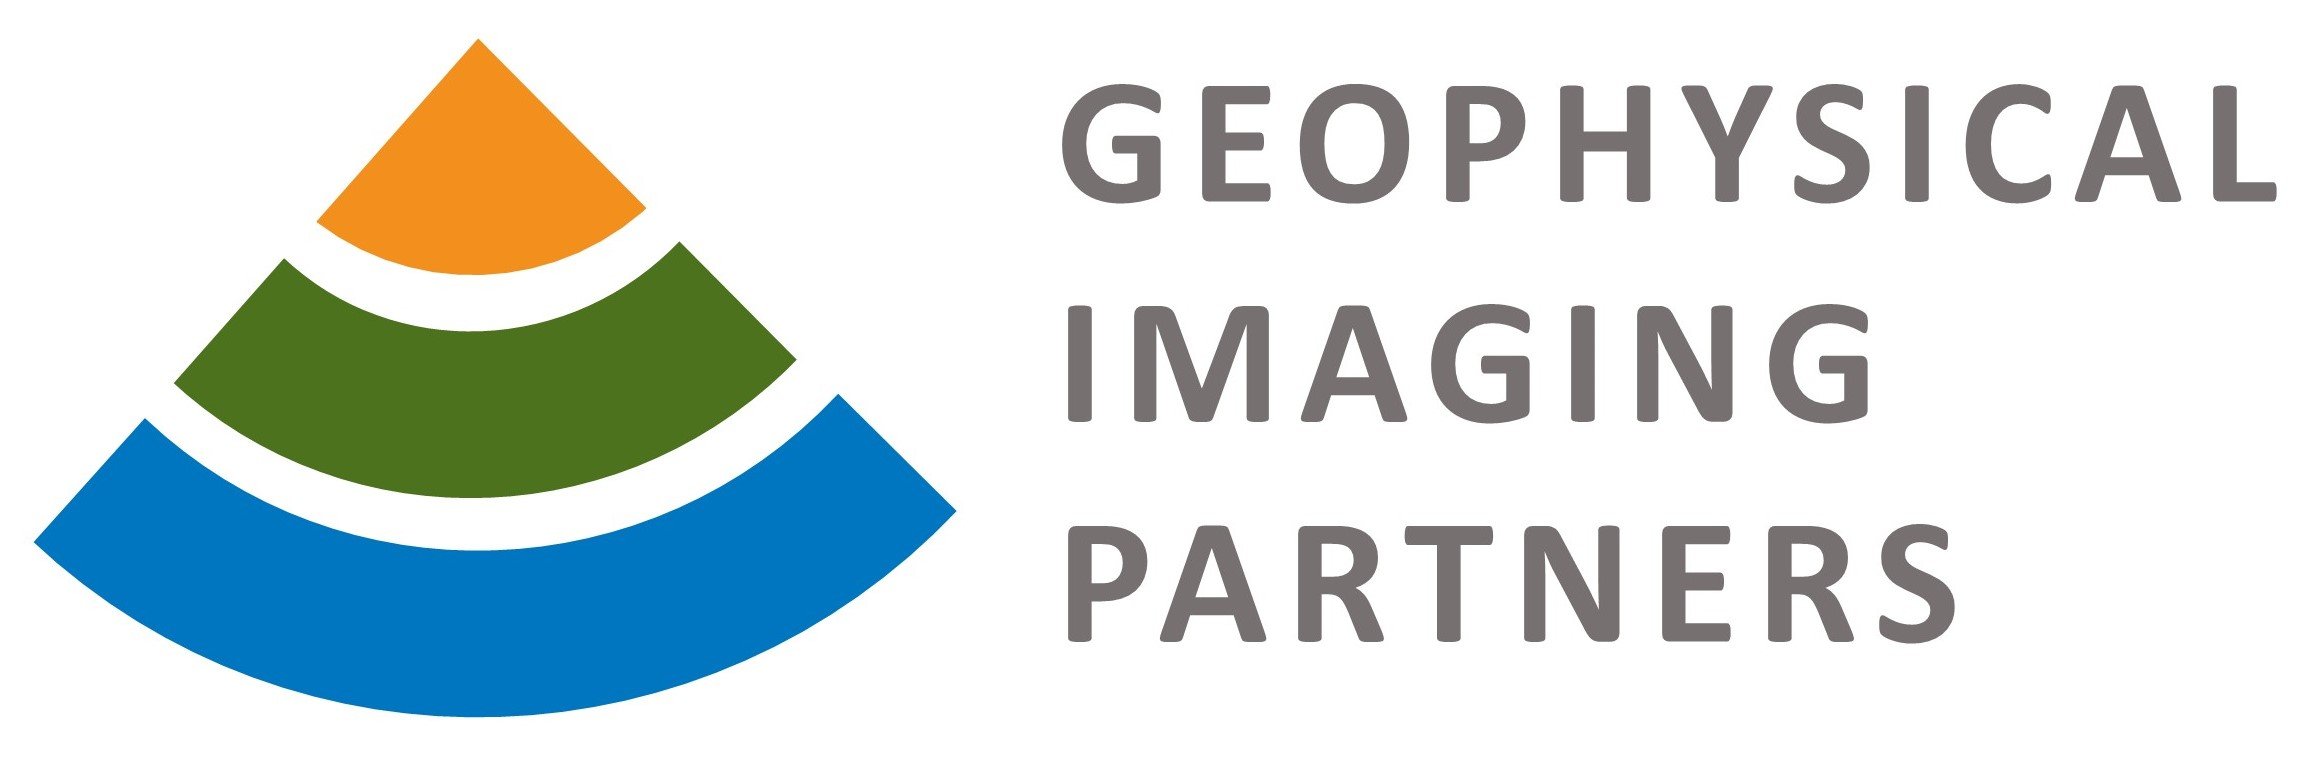 Geophysical Imaging Partners